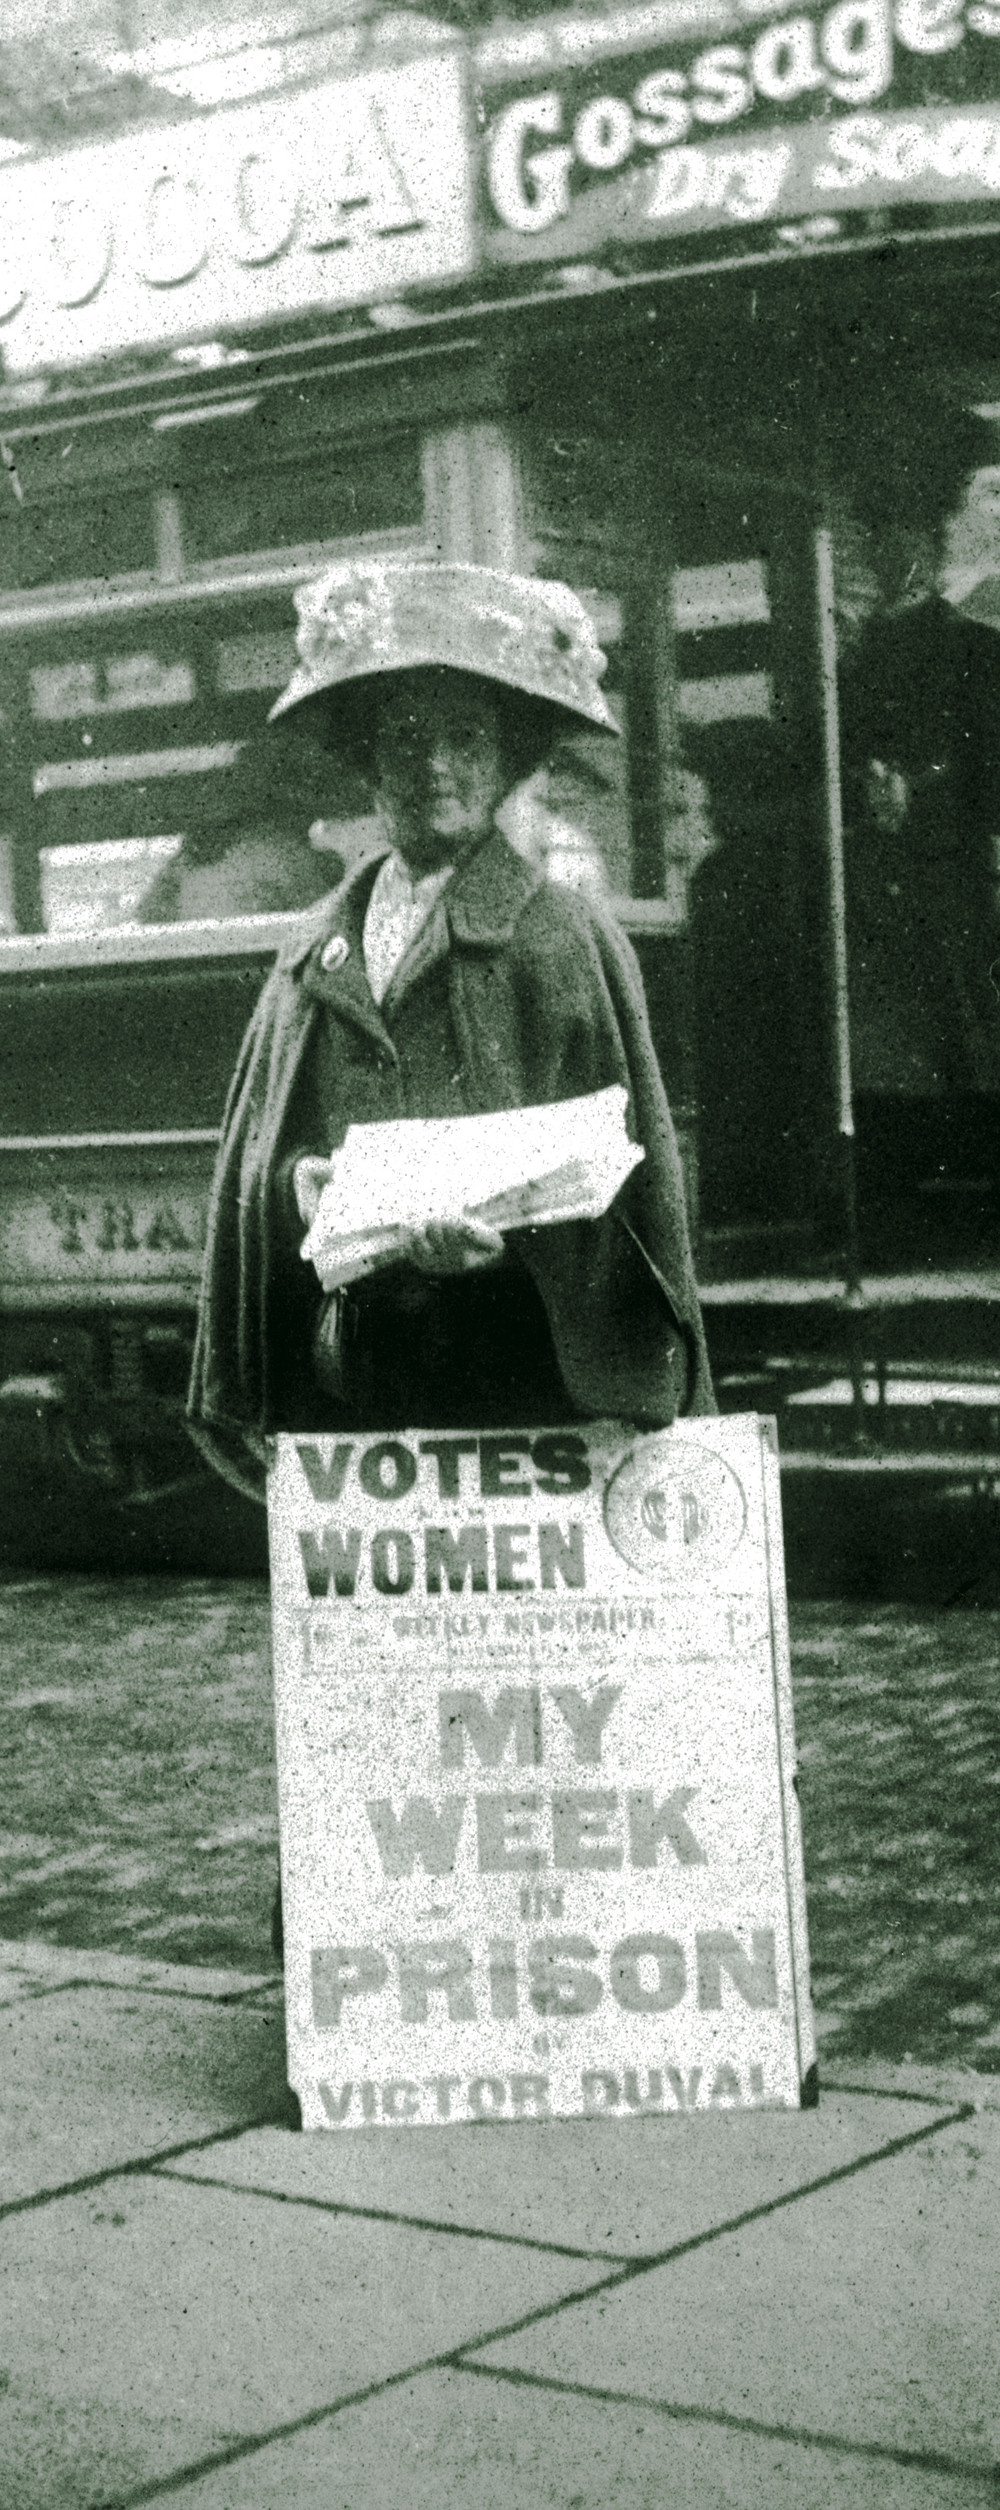 Alice selling votes for women. Courtesy of Peter Barratt